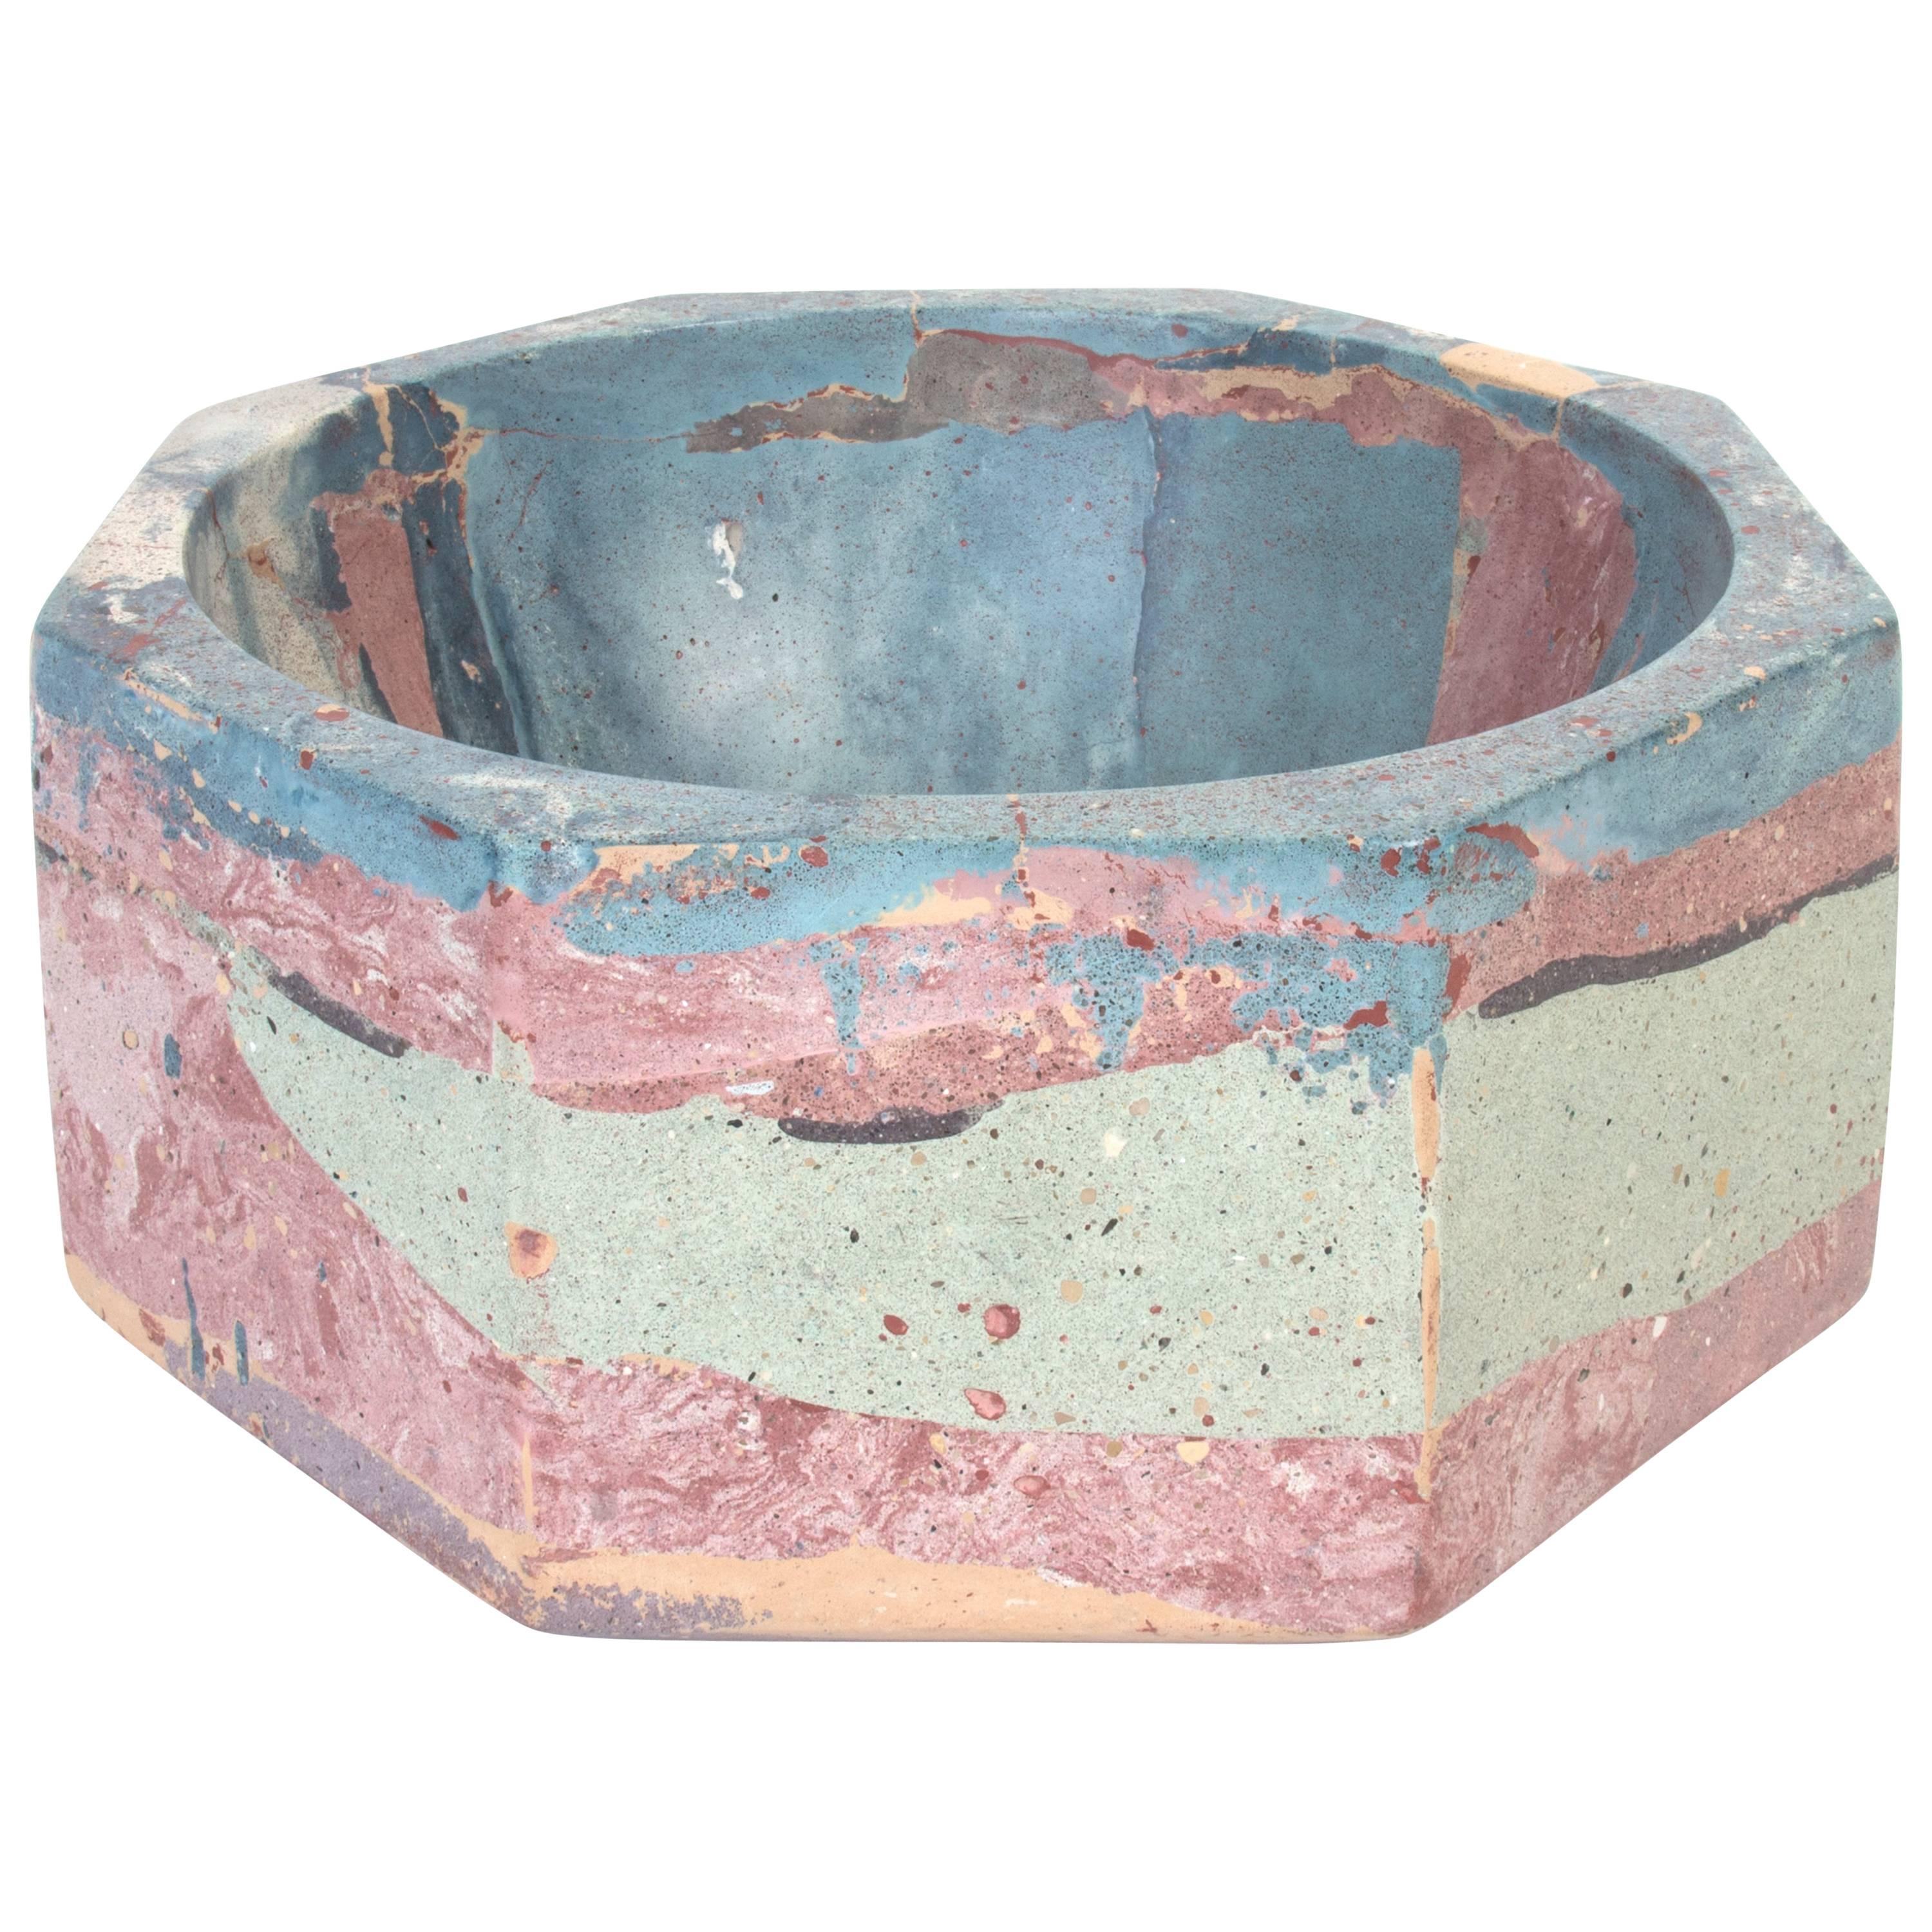 Octavia Max Concrete Bowl in Exclusive Detritus Pattern, Handmade Organic Modern For Sale